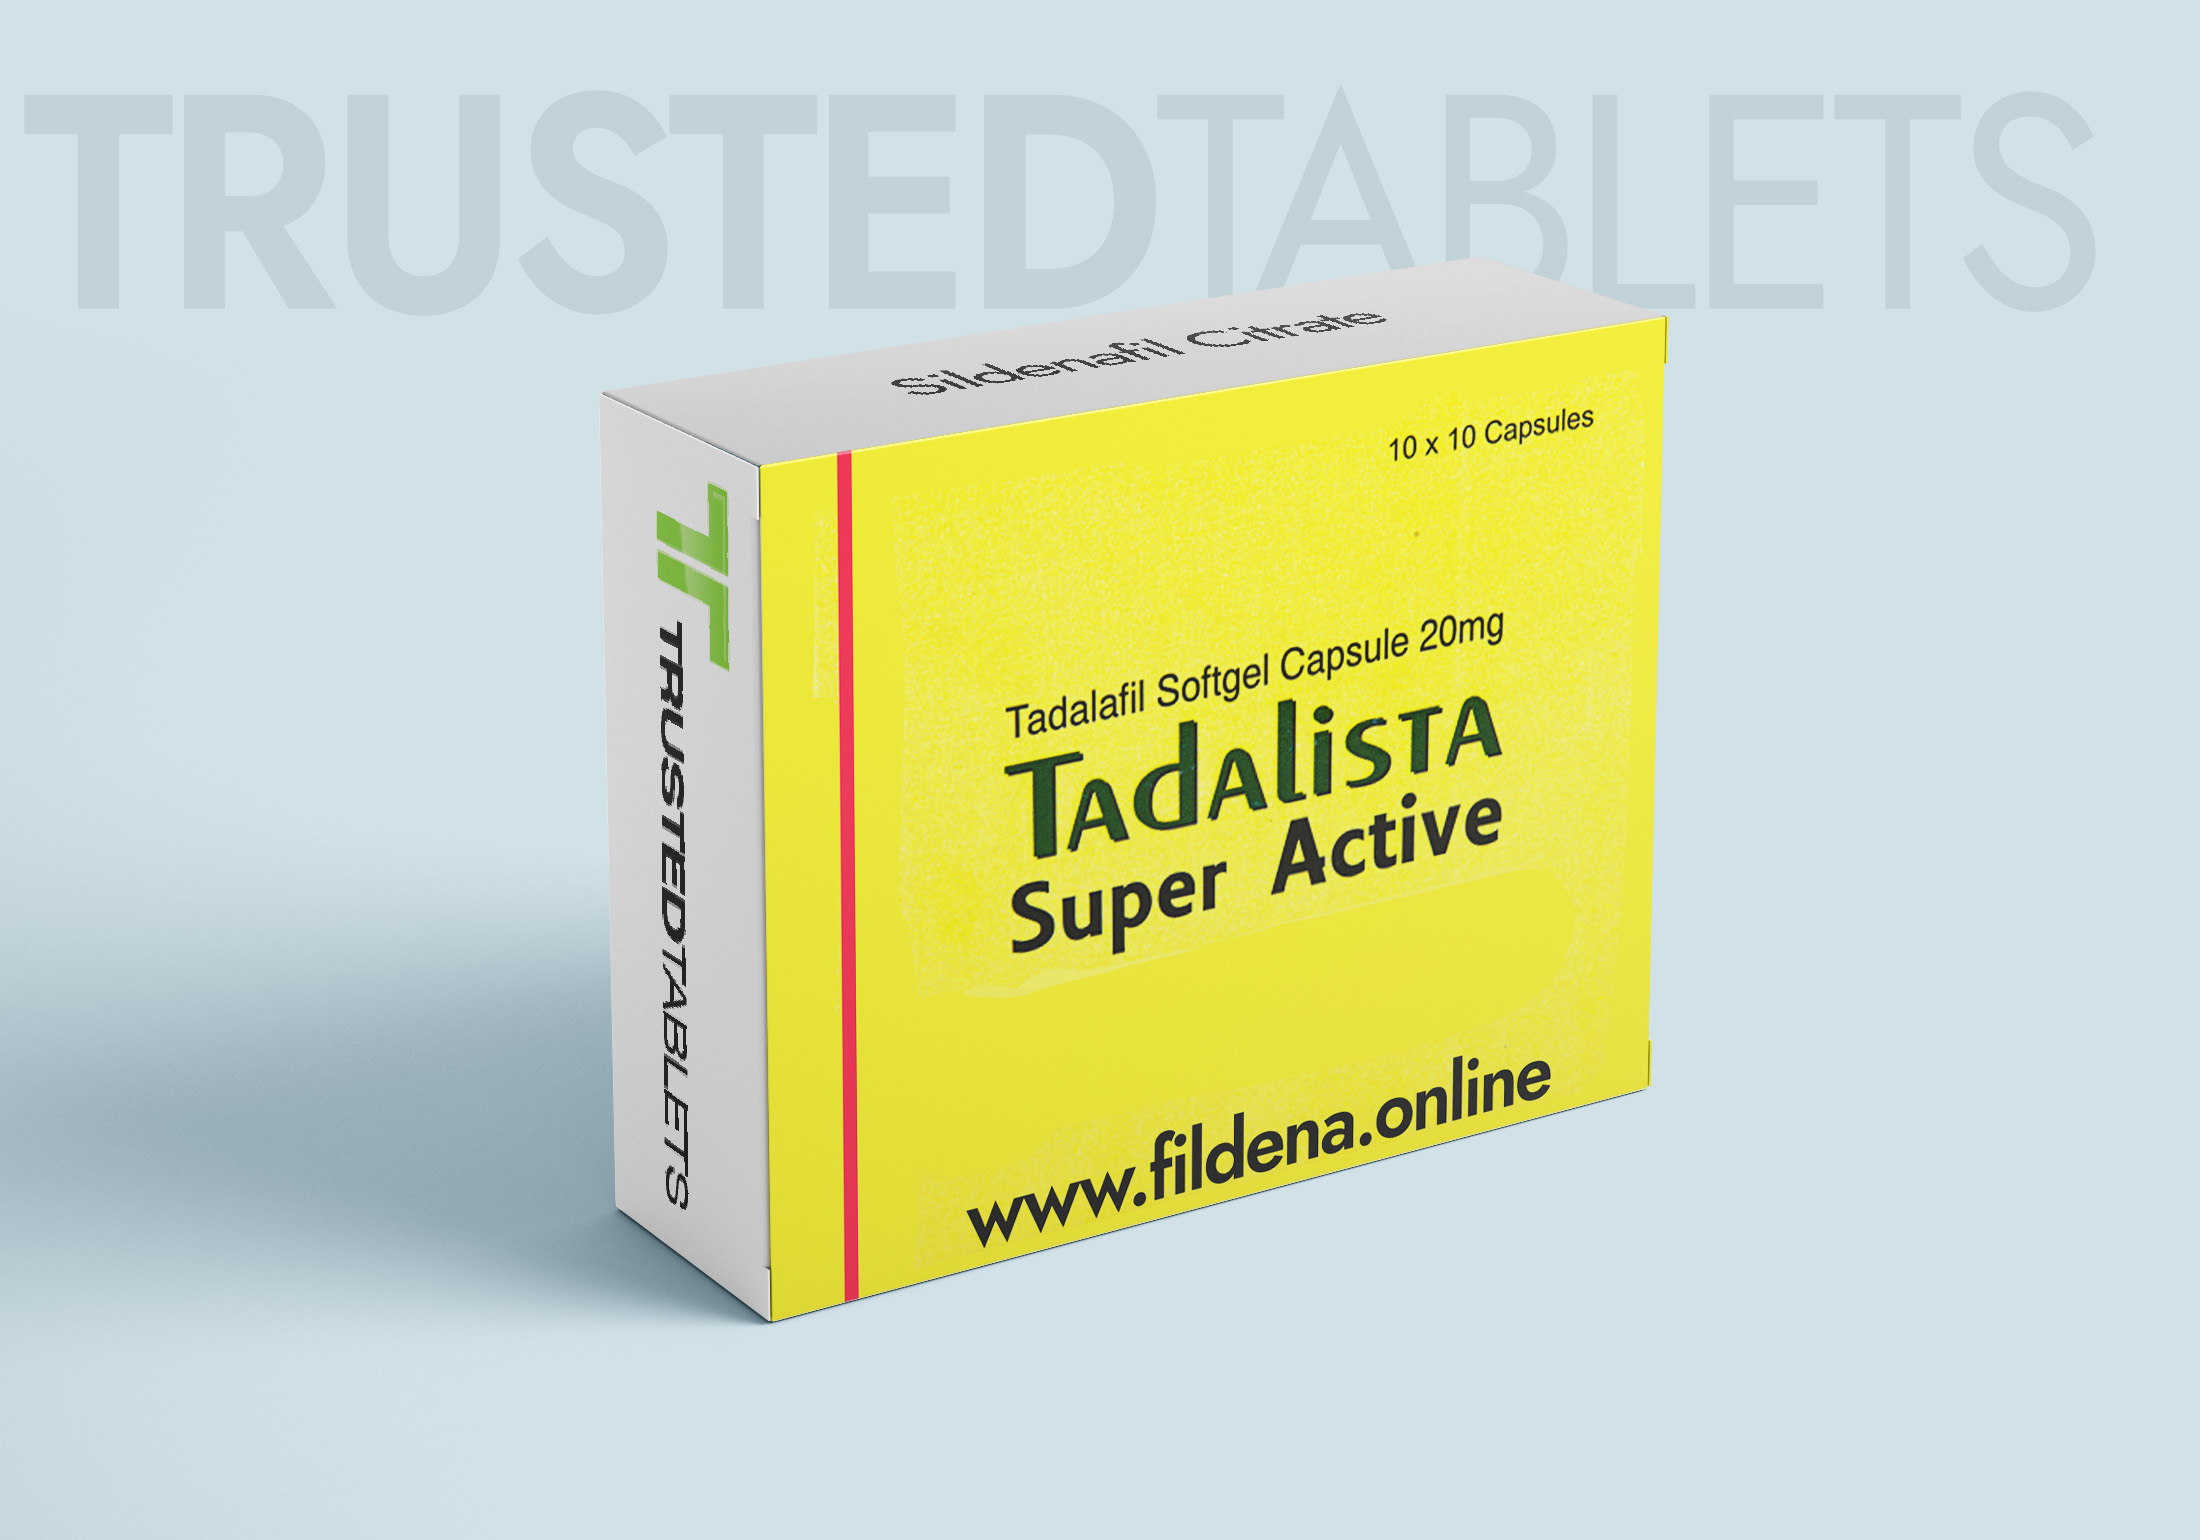 Tadalista Super Active TrustedTablets